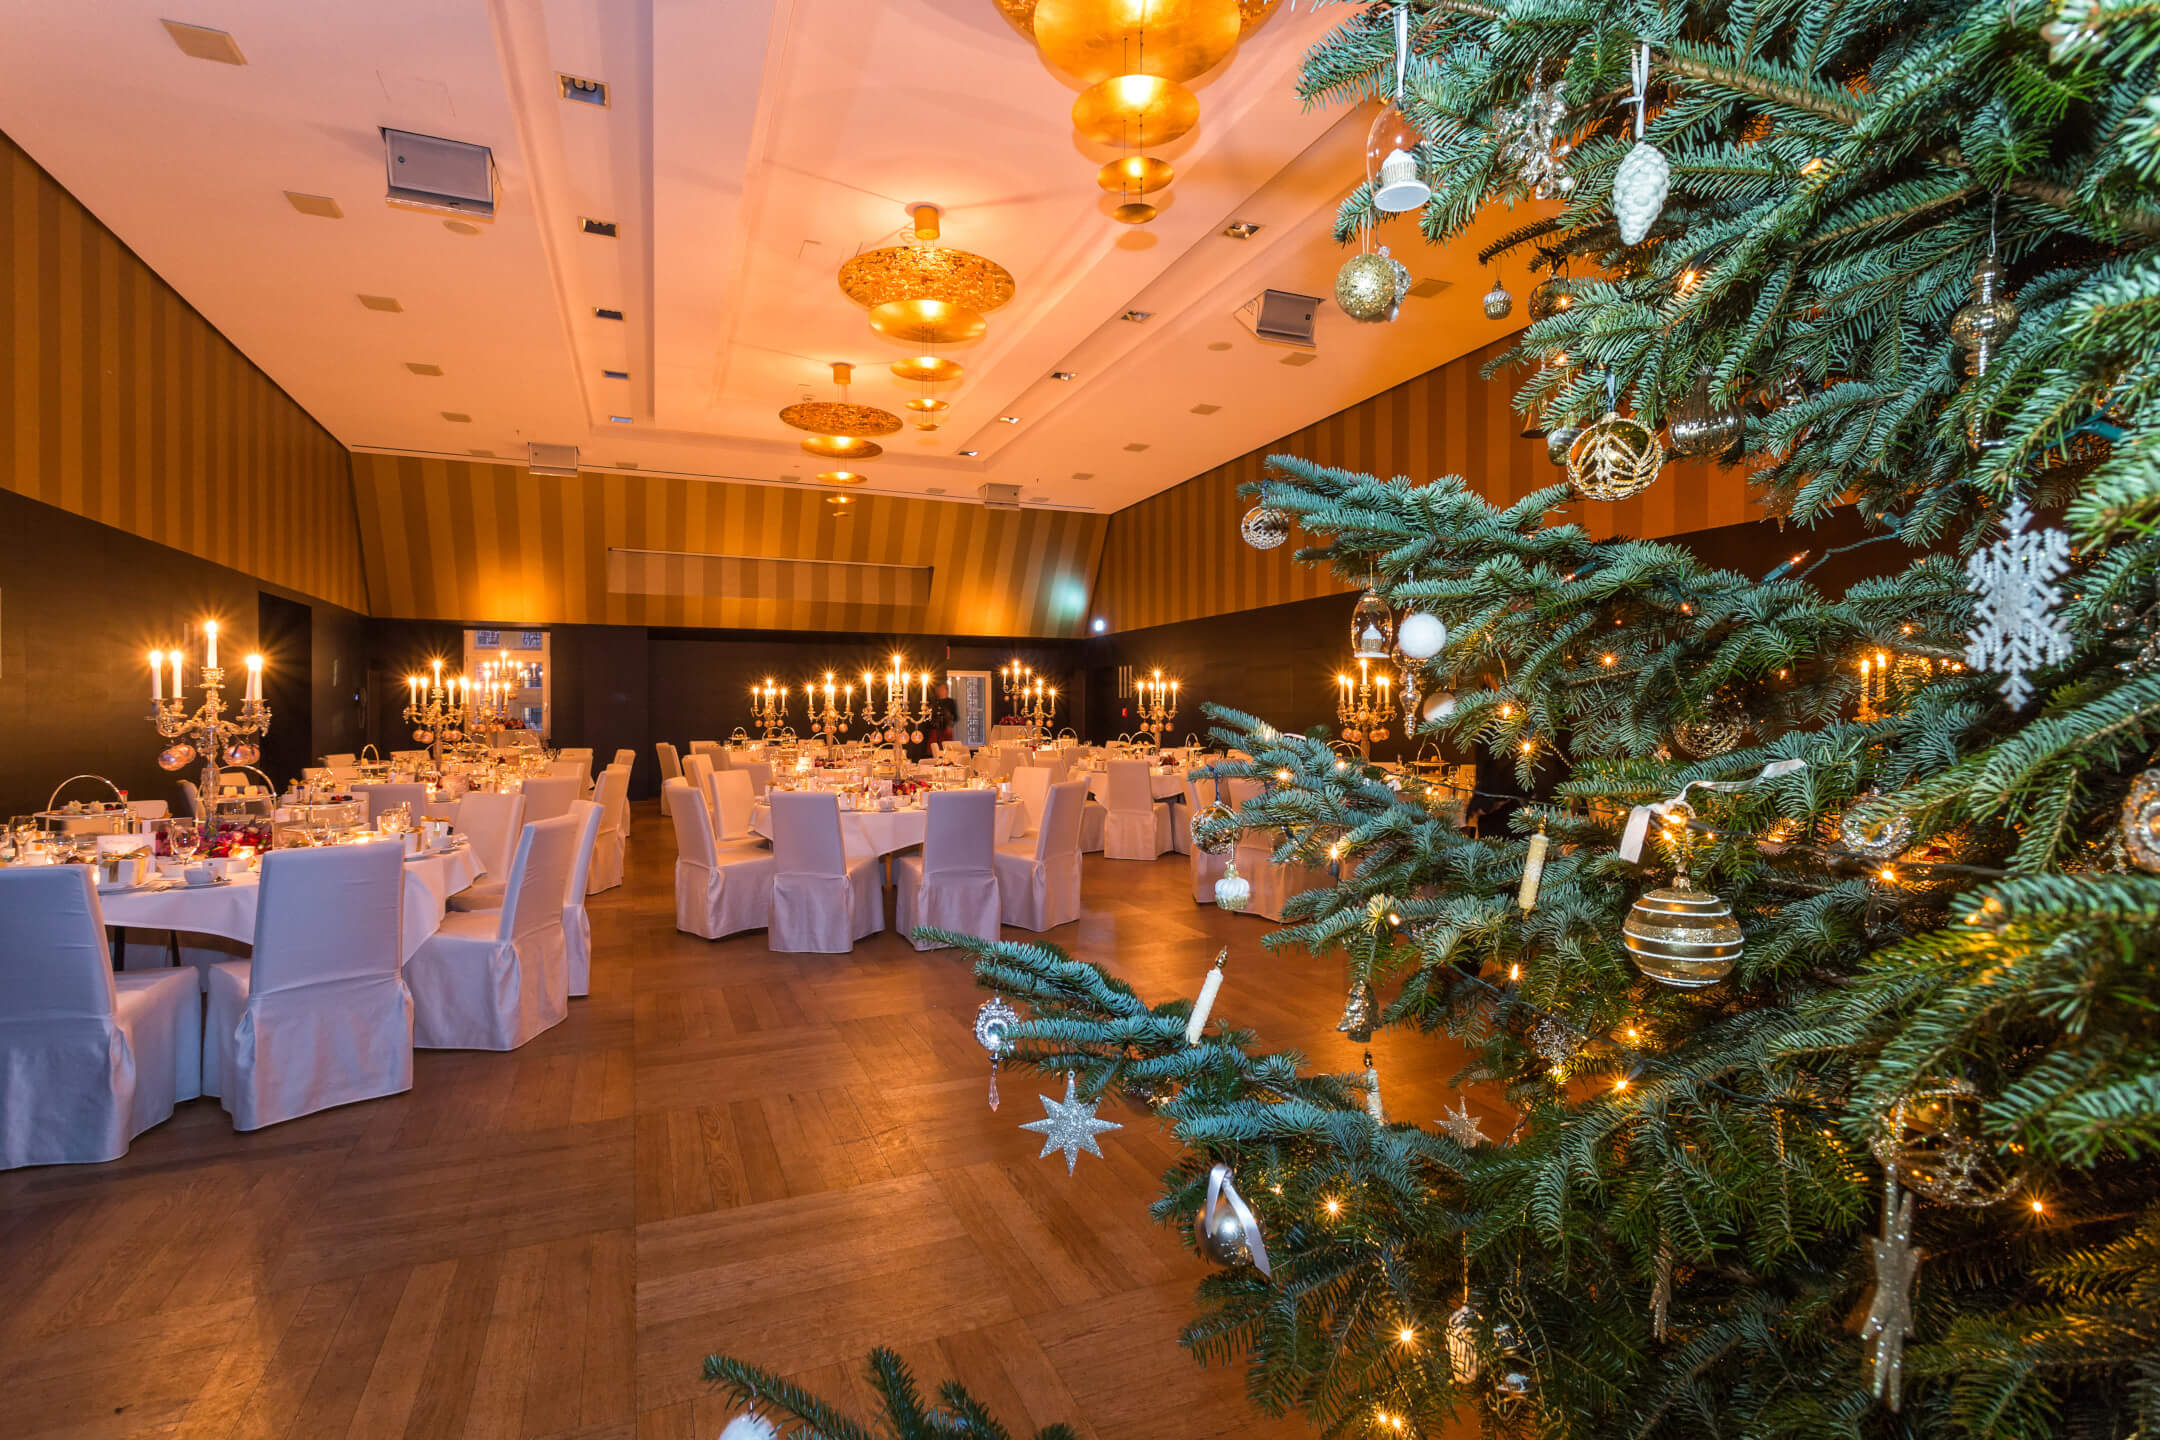 Goldener Saal with christmastree